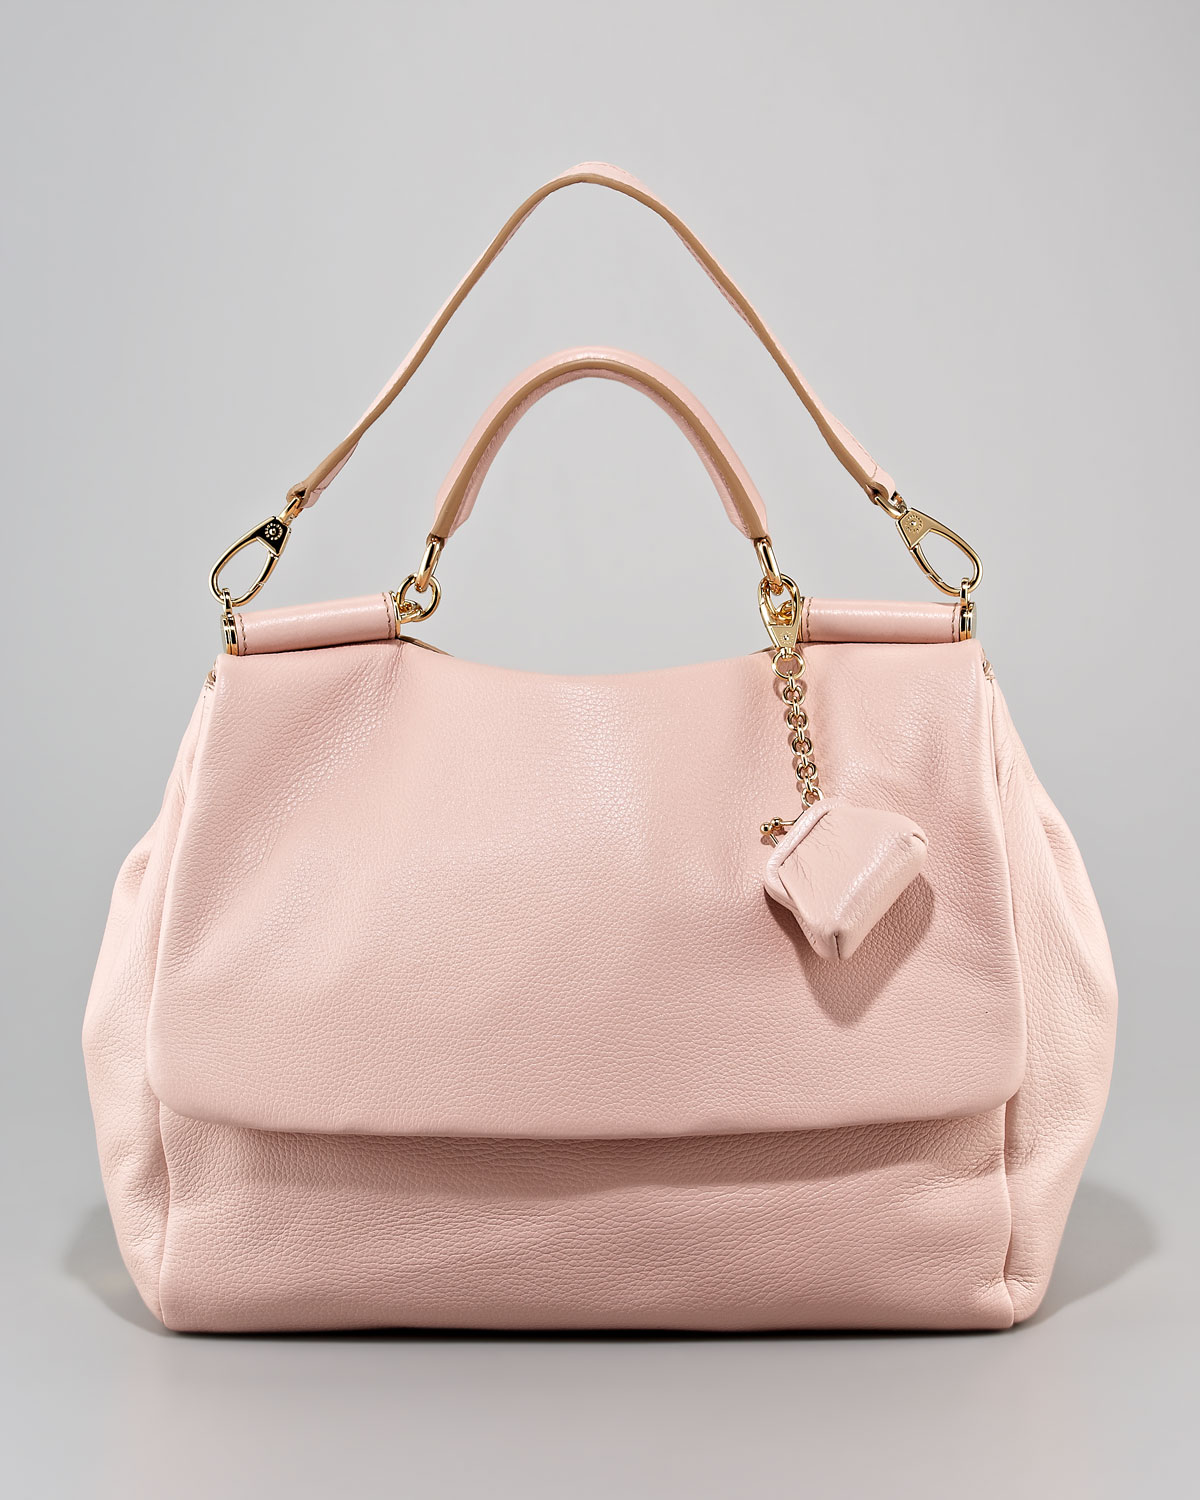 Dolce & Gabbana Miss Sicily Leather Handbag Large in Sand (Pink) - Lyst